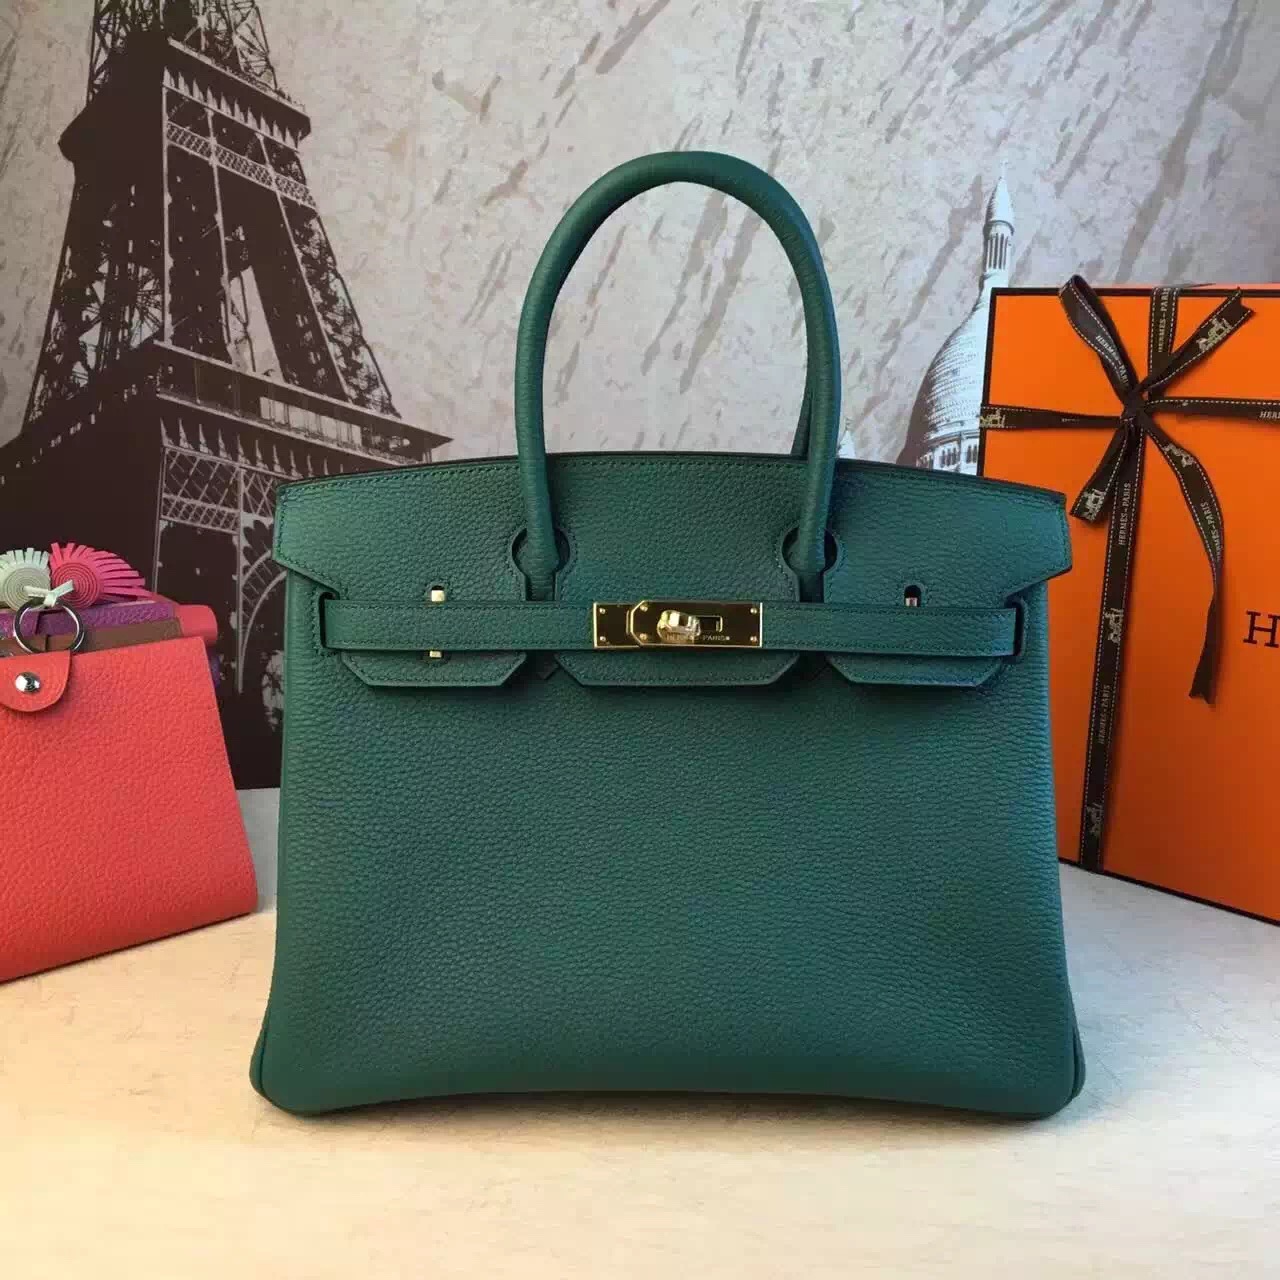 Hermes top leather green Birkin handbags